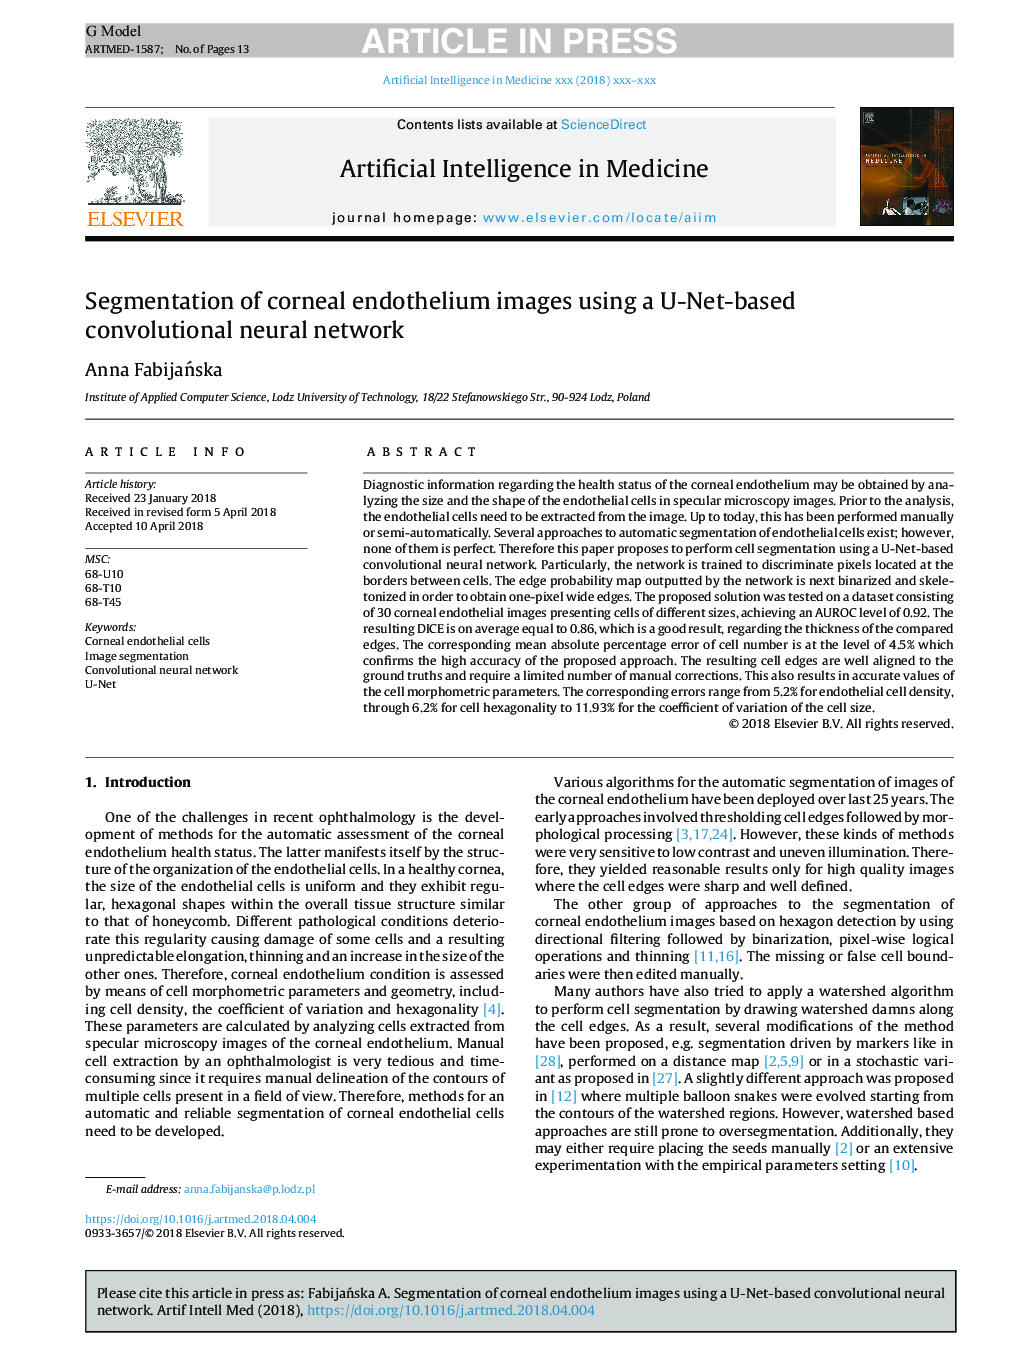 Segmentation of corneal endothelium images using a U-Net-based convolutional neural network